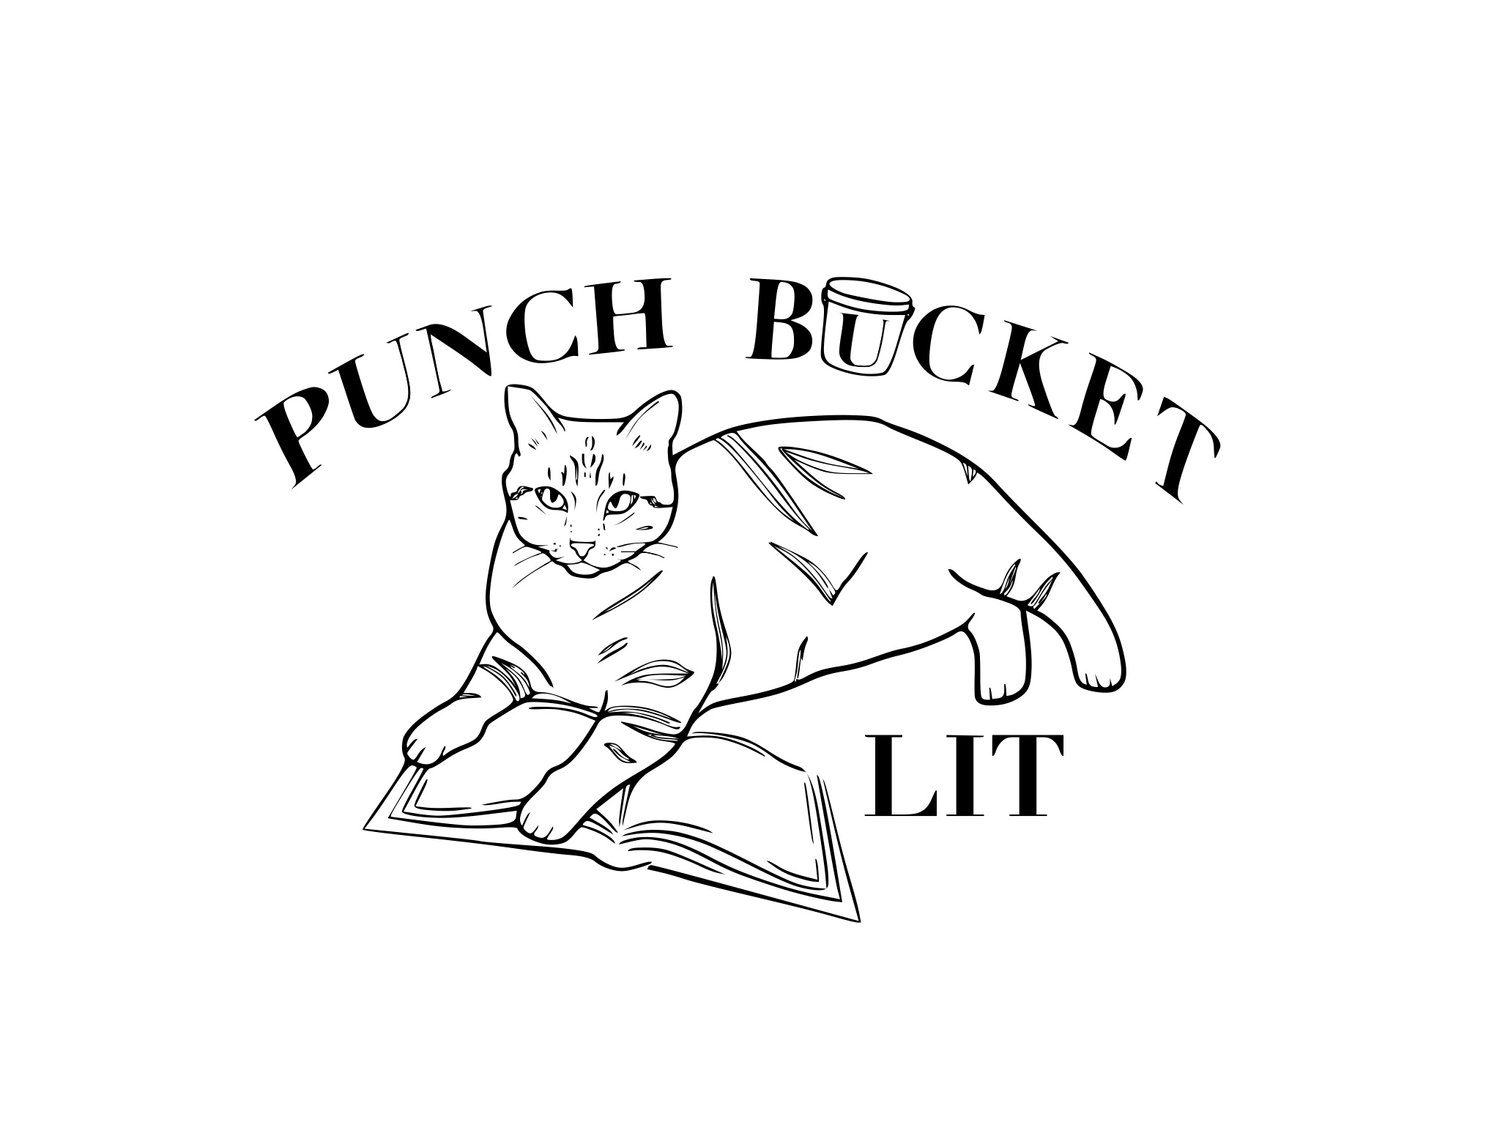 Punch Bucket Lit